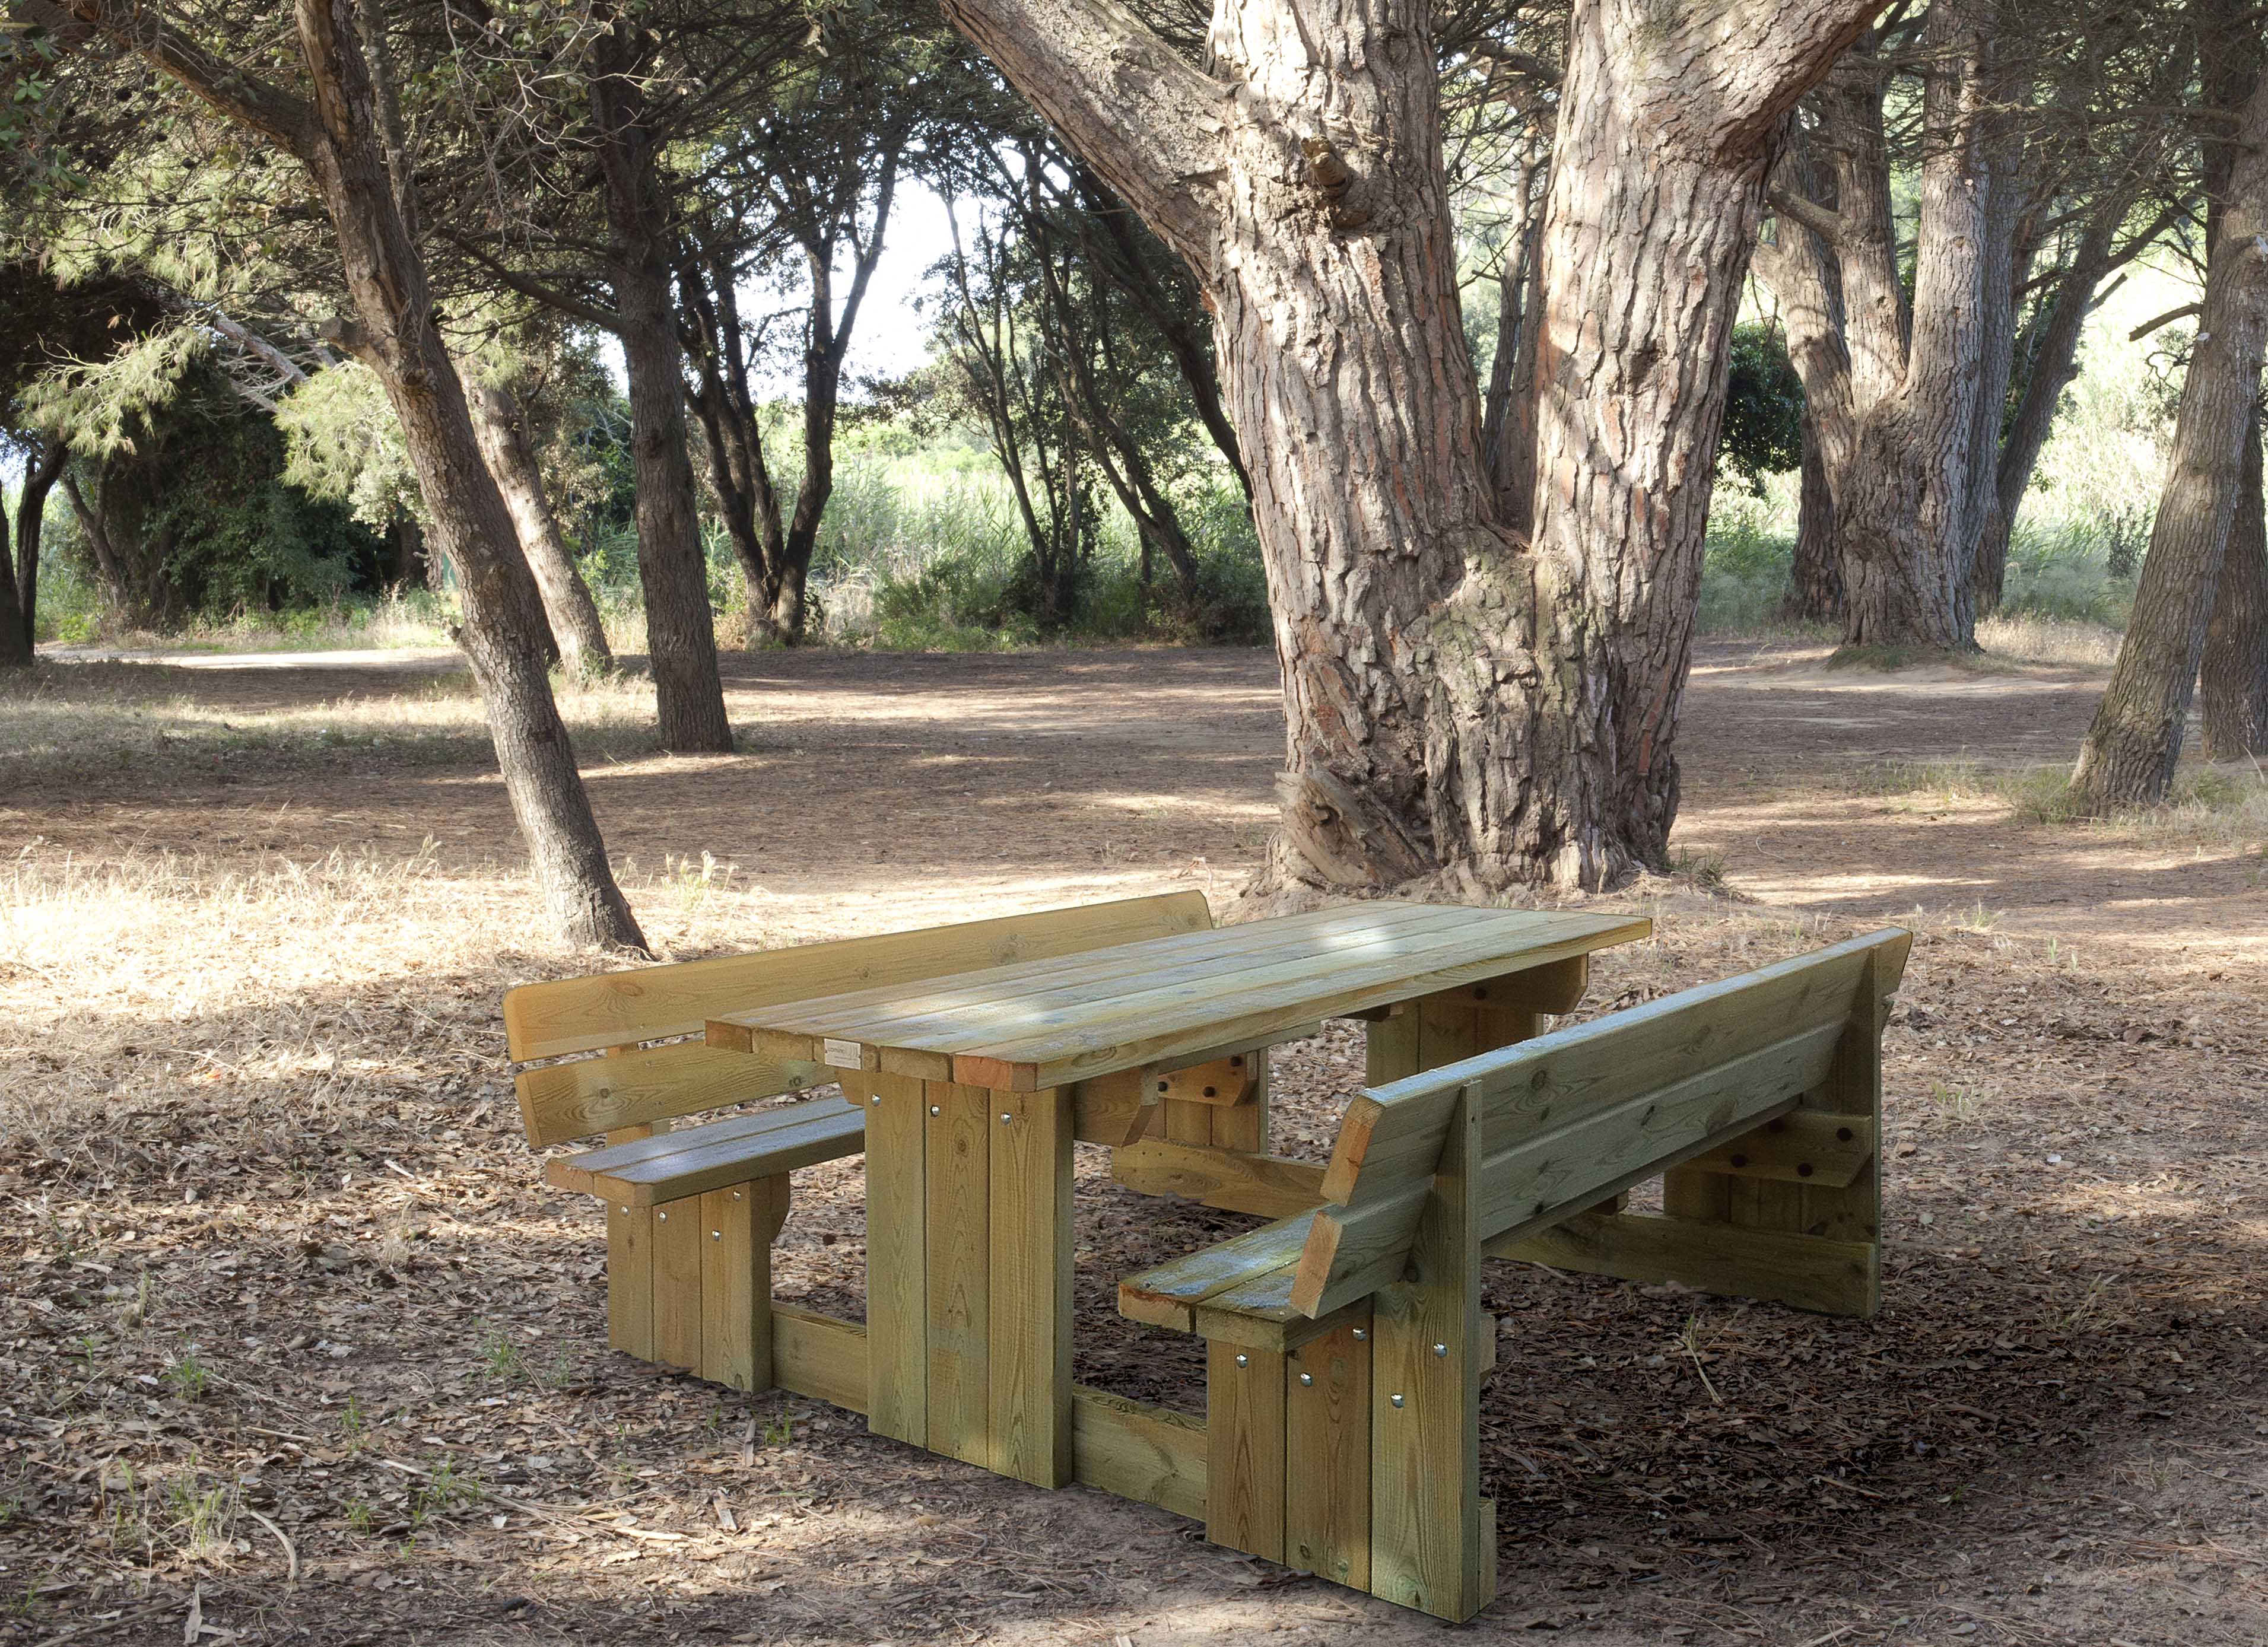 Mesas de pícnic : Mesas Navic: Mesa de pícnic de madera tratada Navic